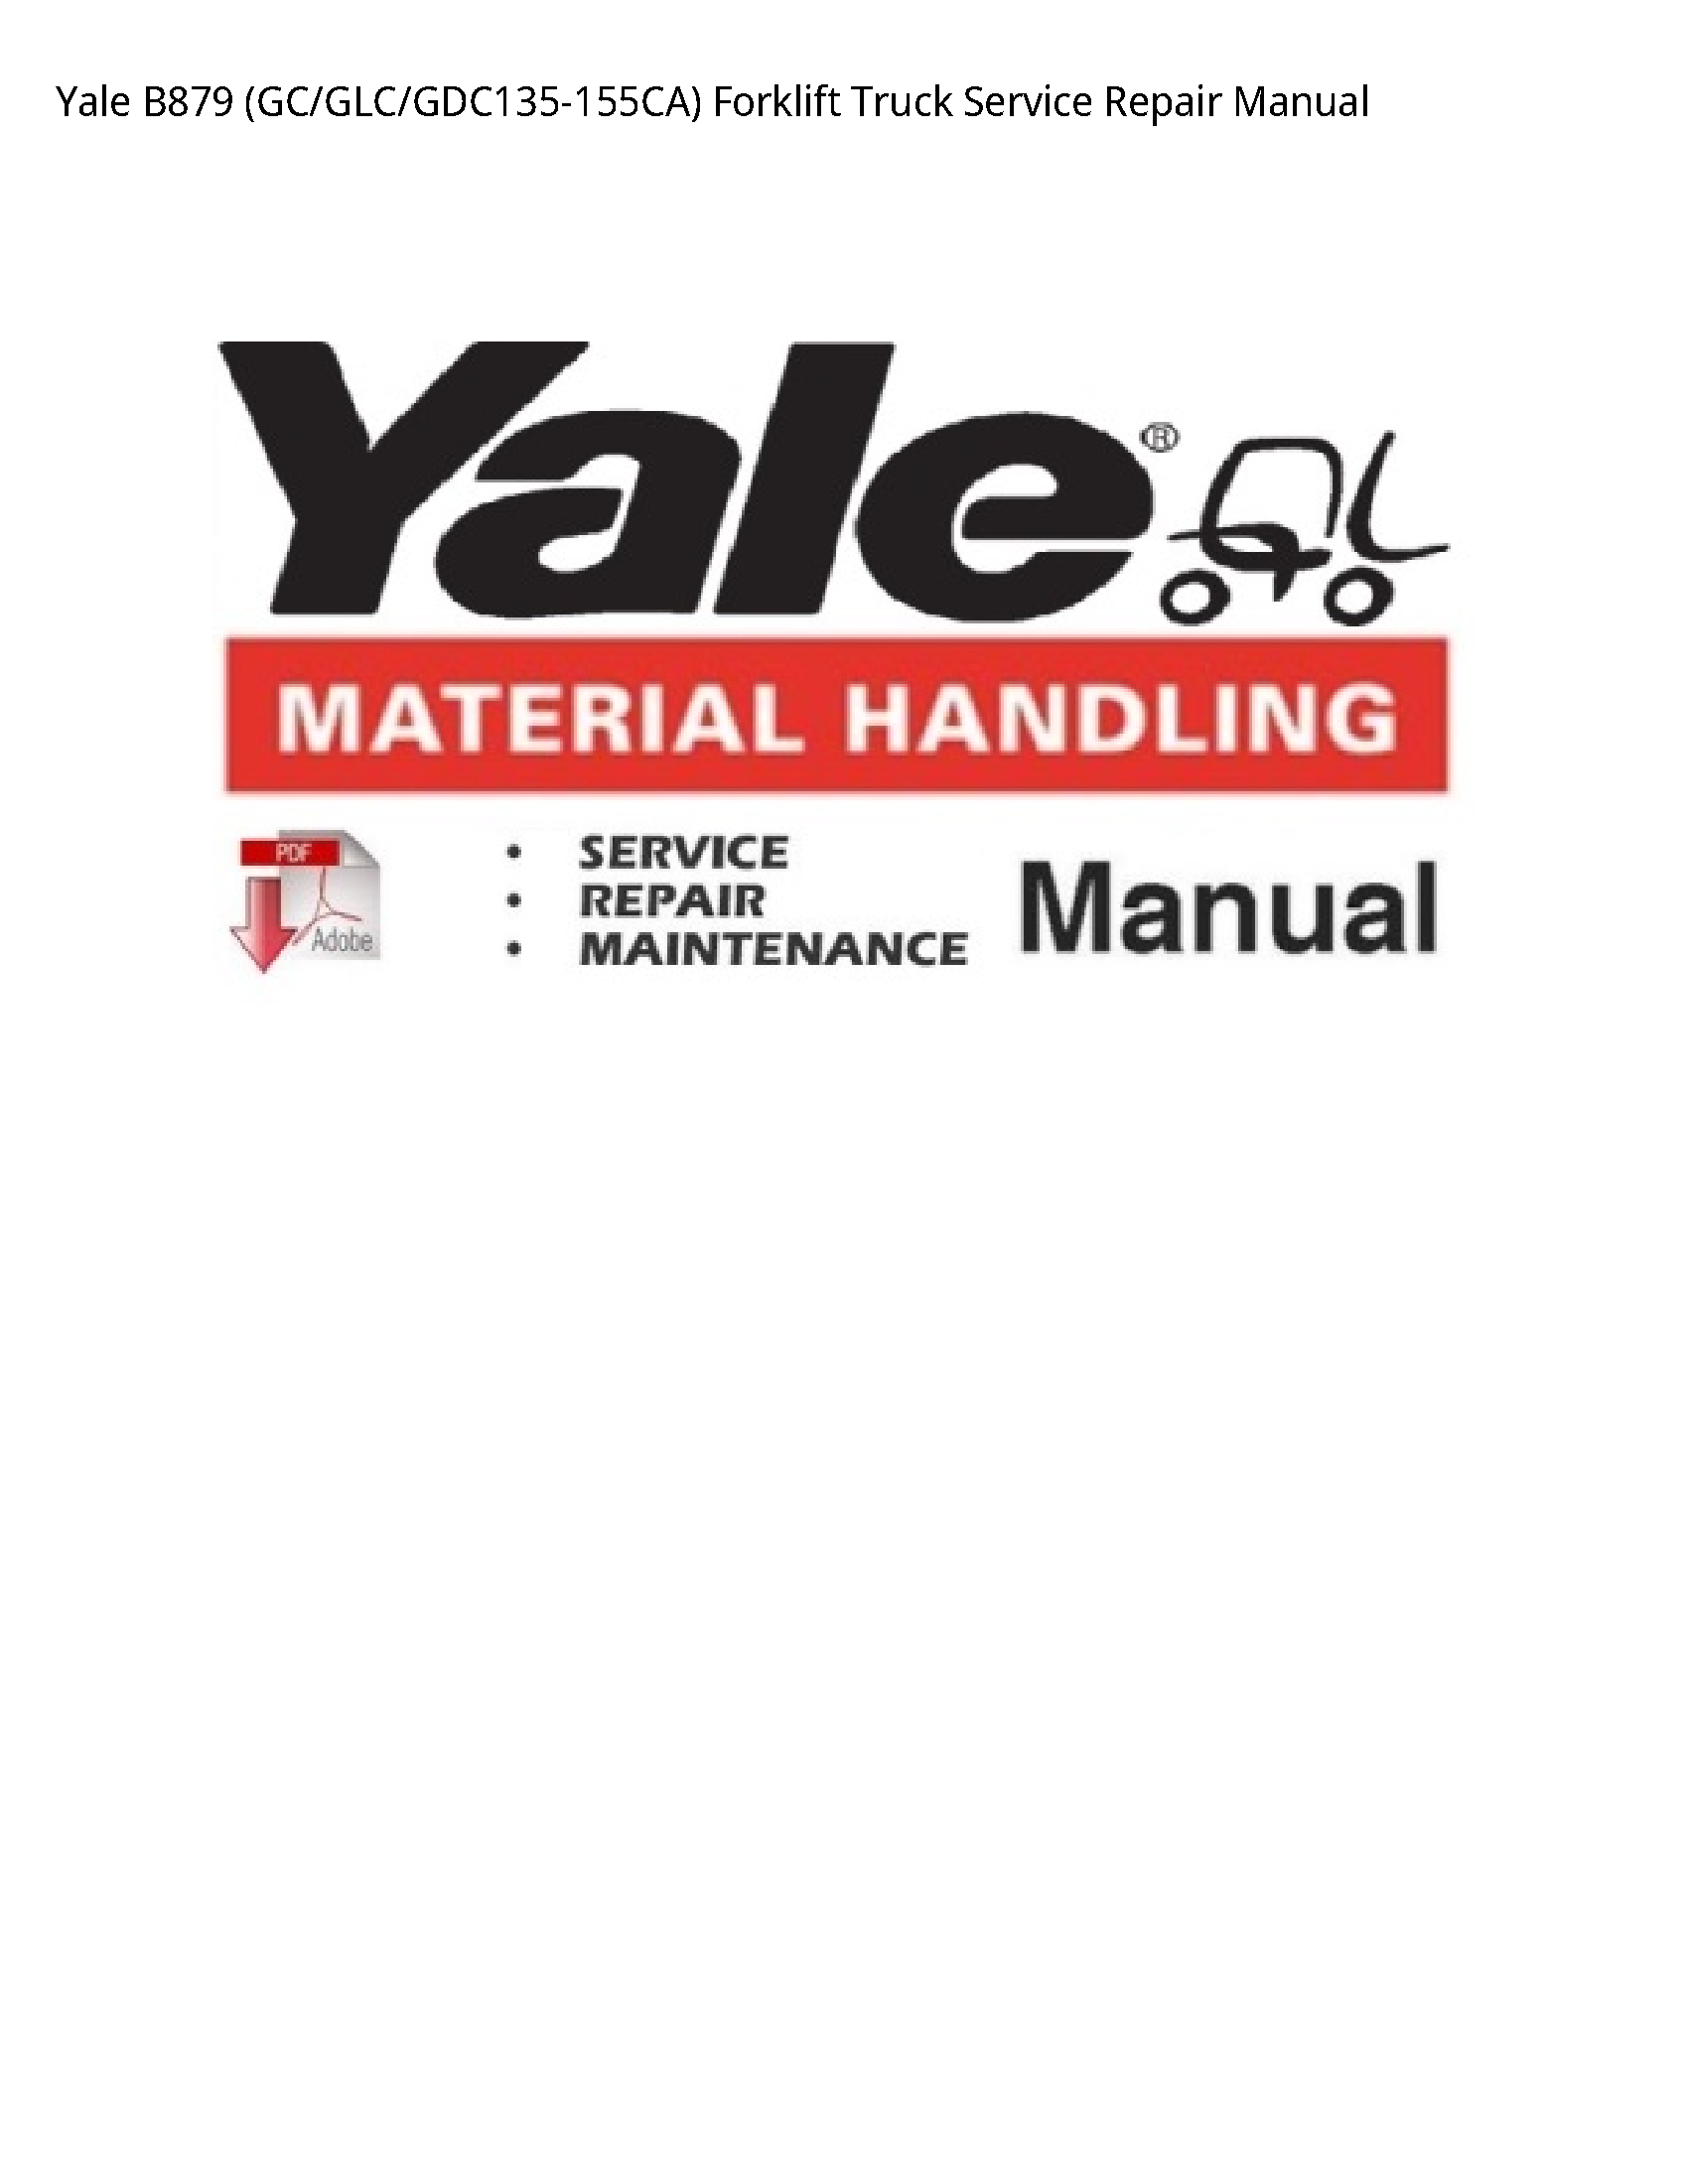 Yale B879 Forklift Truck manual